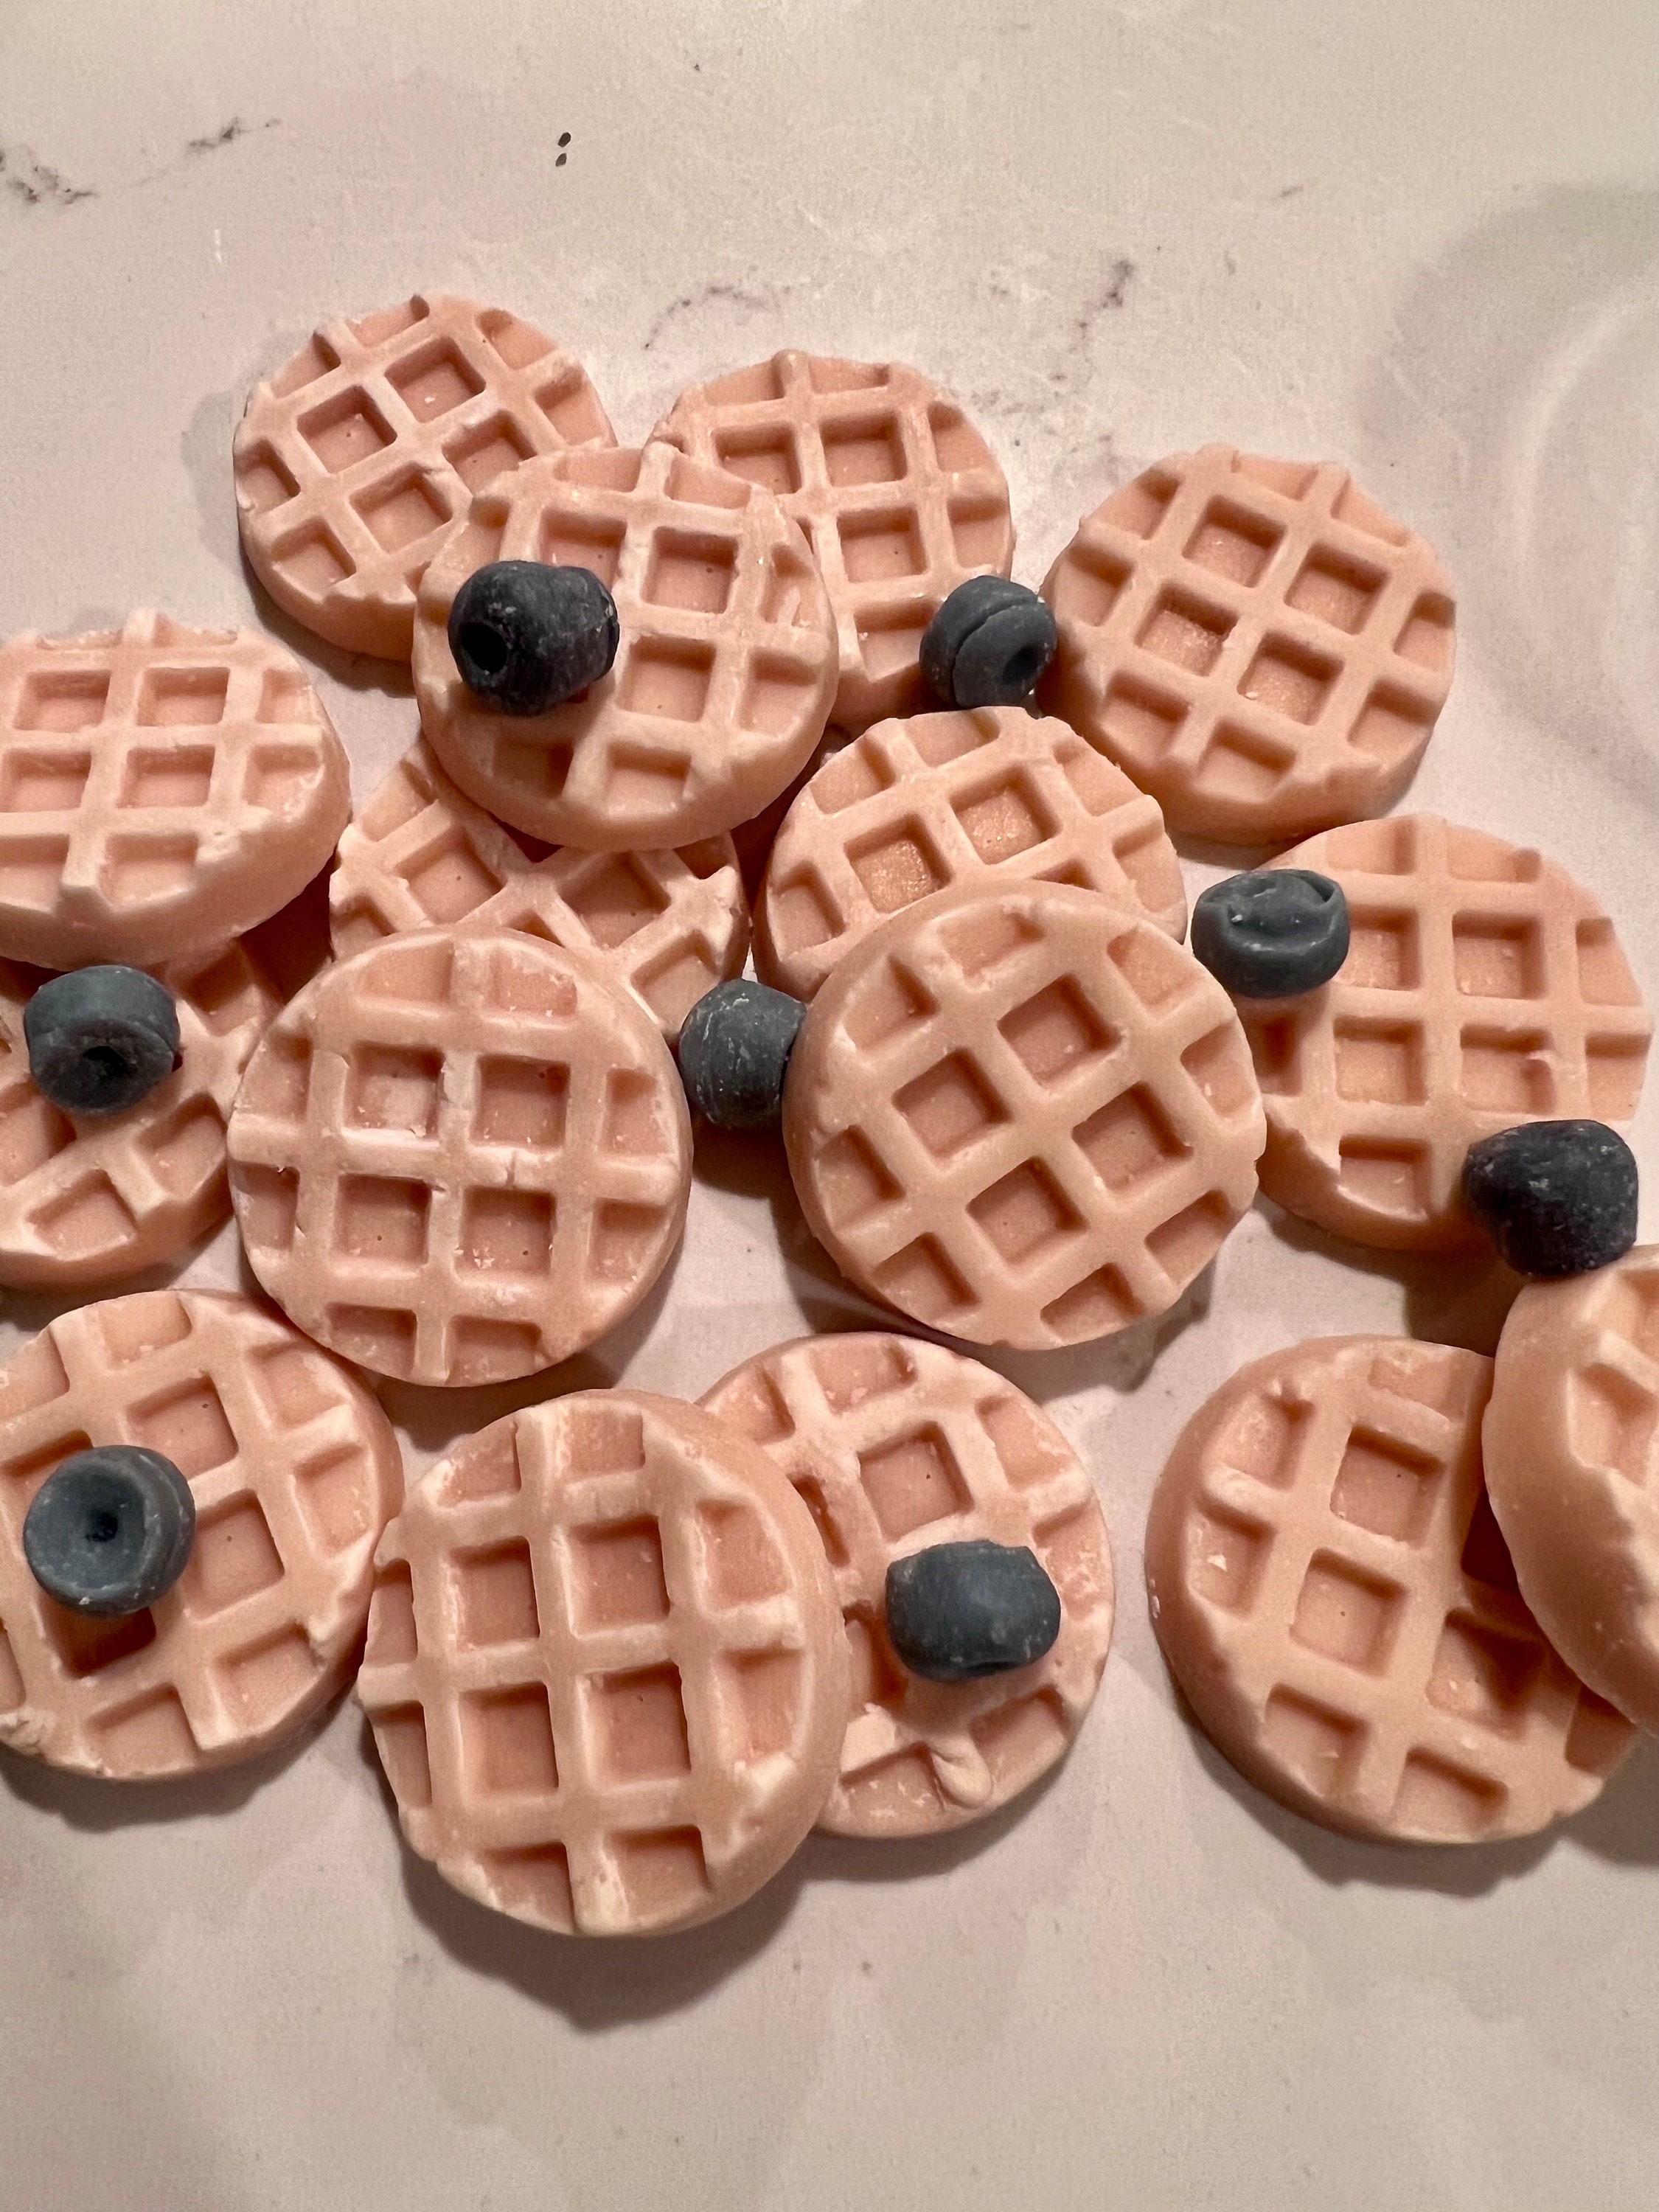 Blueberry and Waffle Wax Melts / Food Like Wax Melts – Sugar and Spice  Custom Creations, LLC